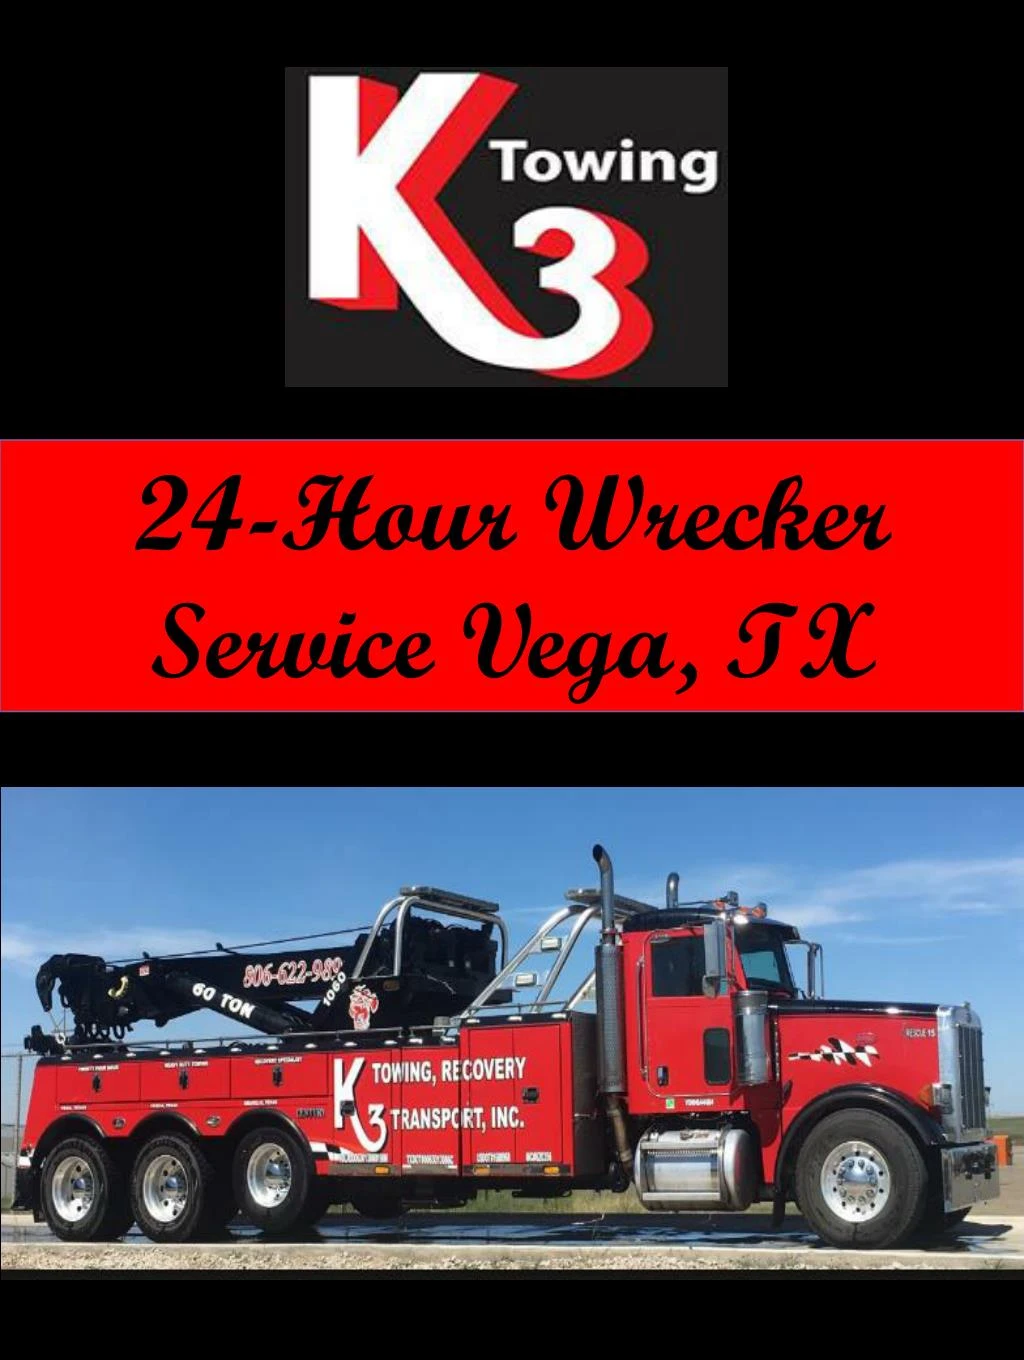 24 hour wrecker service vega tx